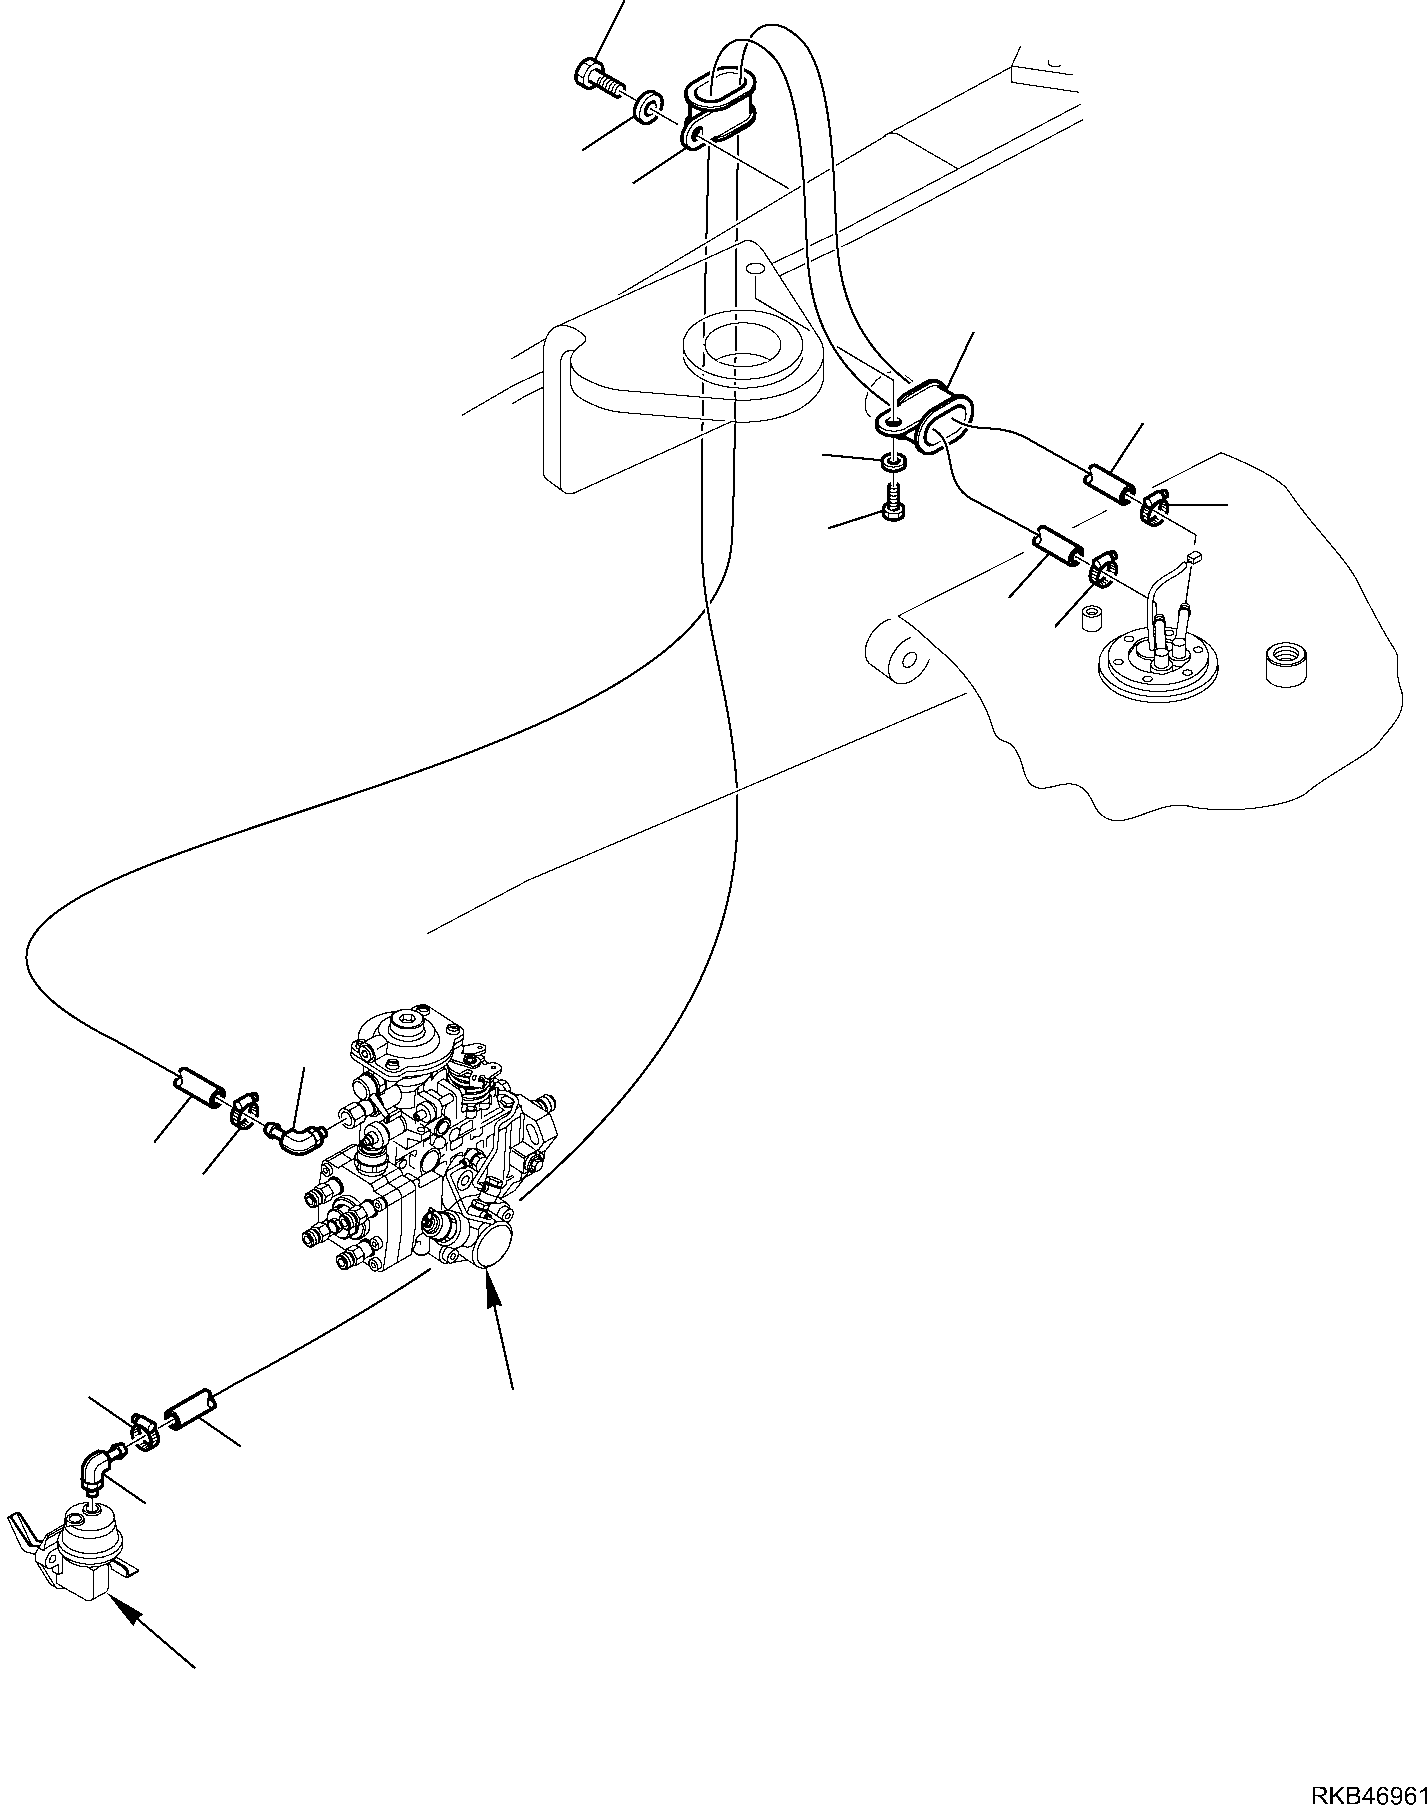 26. FUEL LINE [1310] - Komatsu part WB97S-5E0 S/N F30451- UP [wb97s5e1]